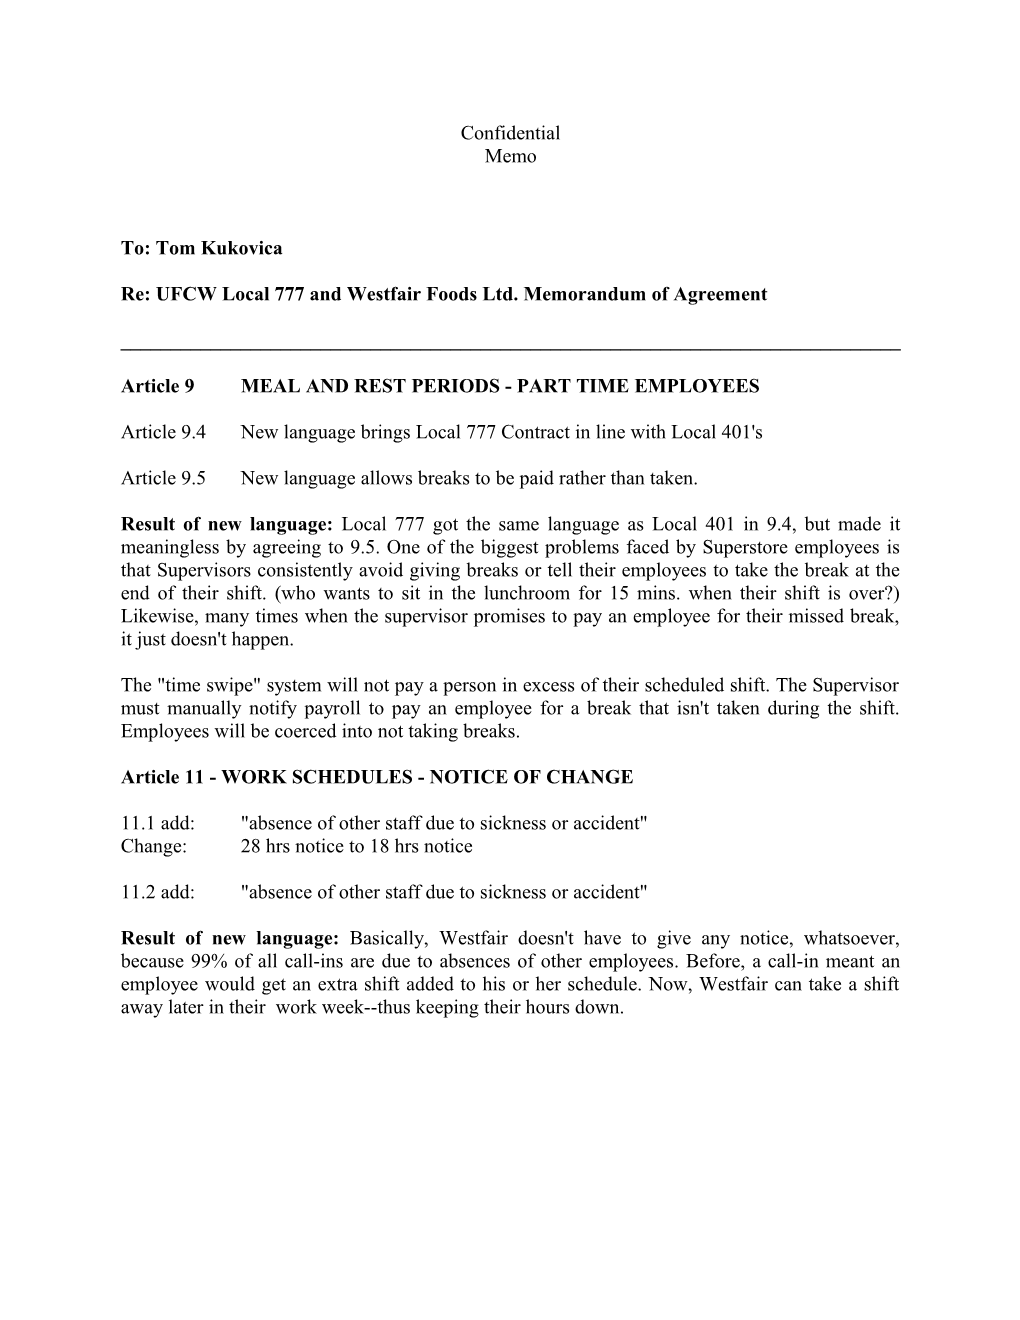 Re: UFCW Local 777 and Westfair Foods Ltd. Memorandum of Agreement